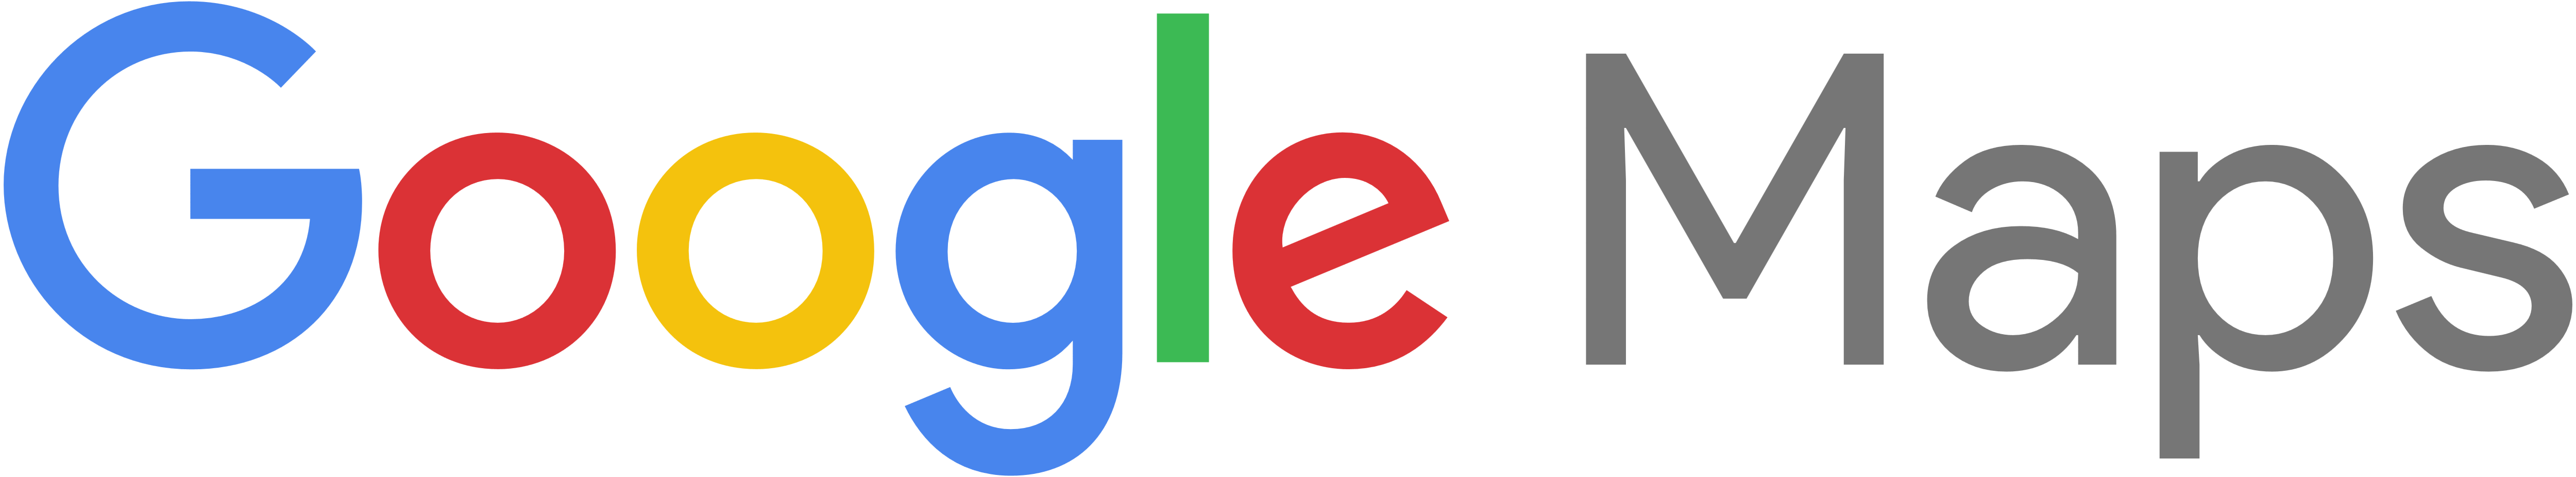 Official Google Maps Logo - Google maps Logos